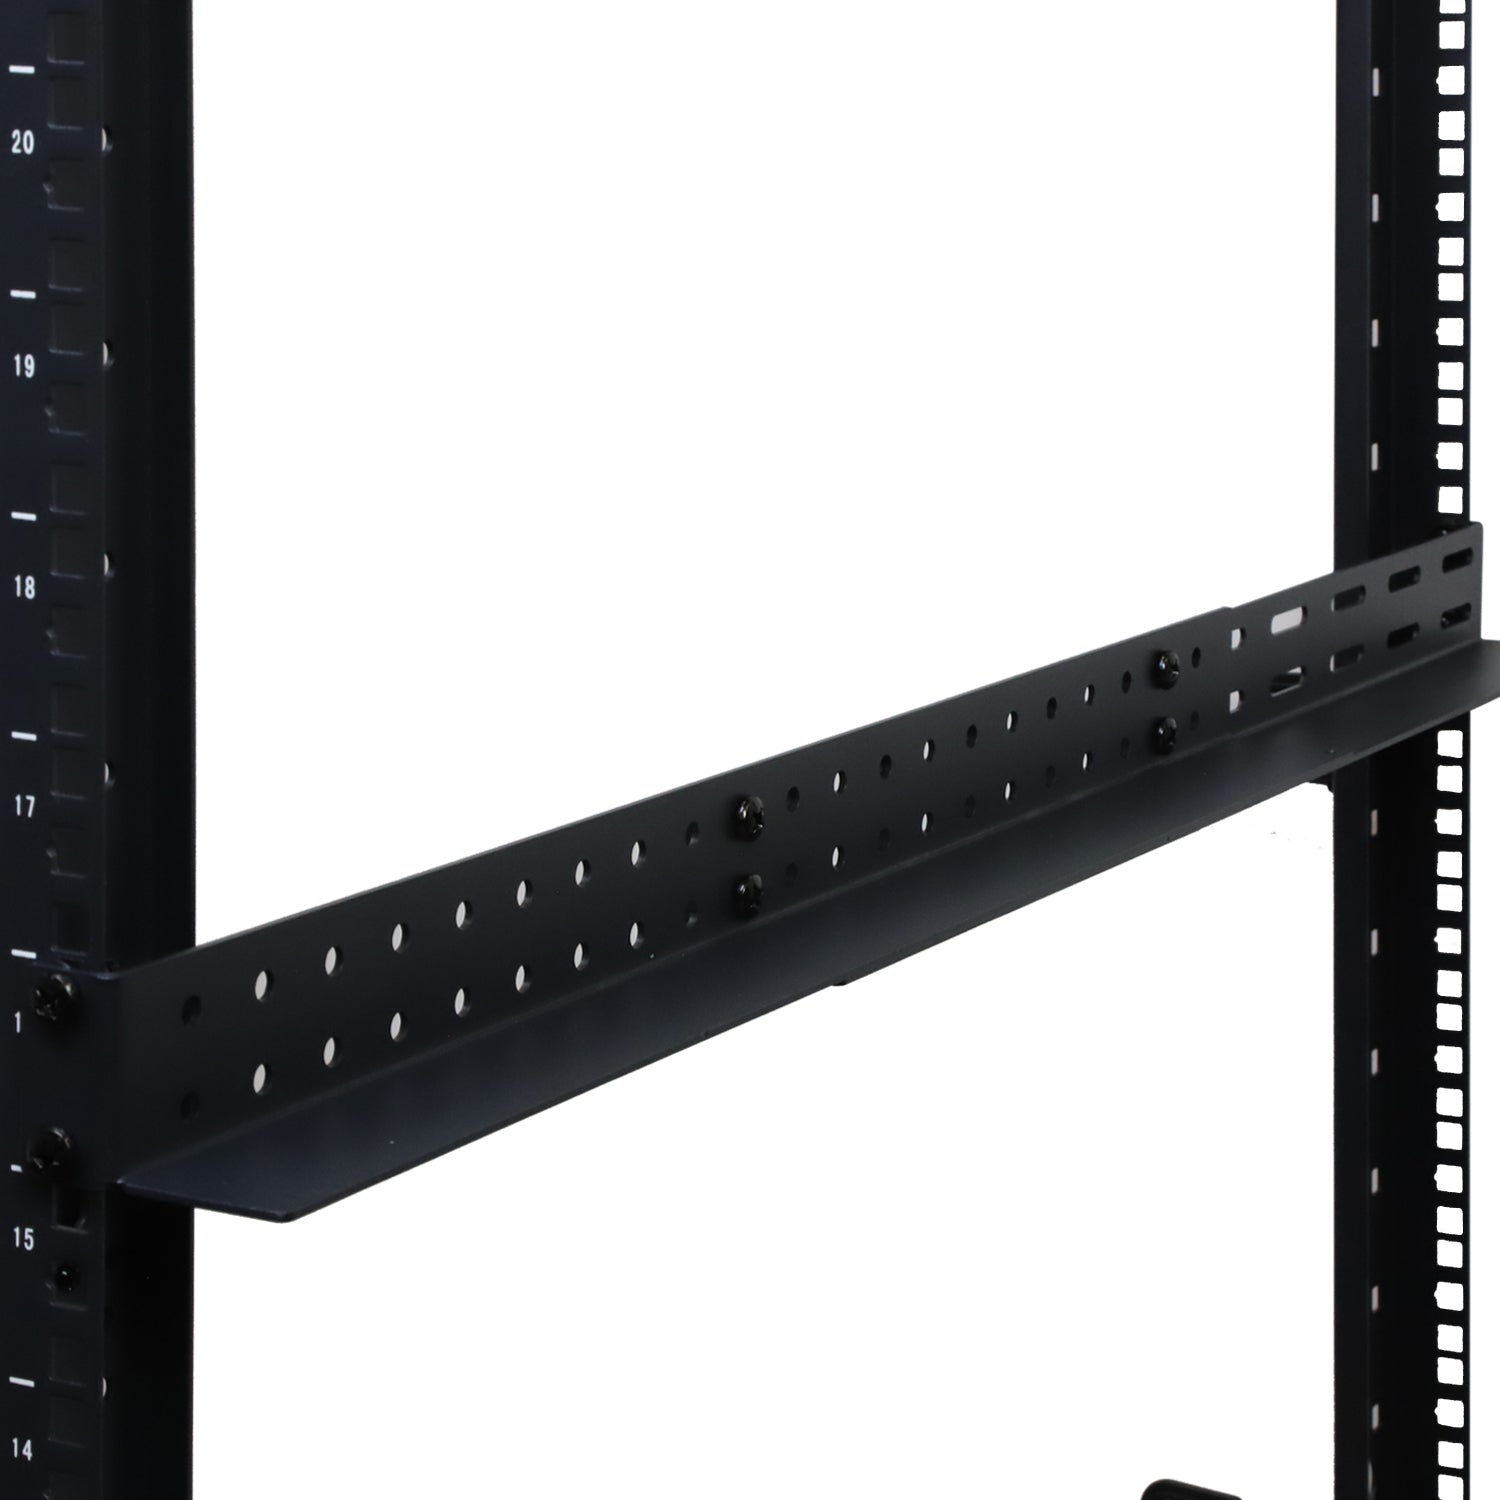 Aeons Universal 1U Adjustable Rack Mount Server Shelf Rails, up to 40-inch Depth